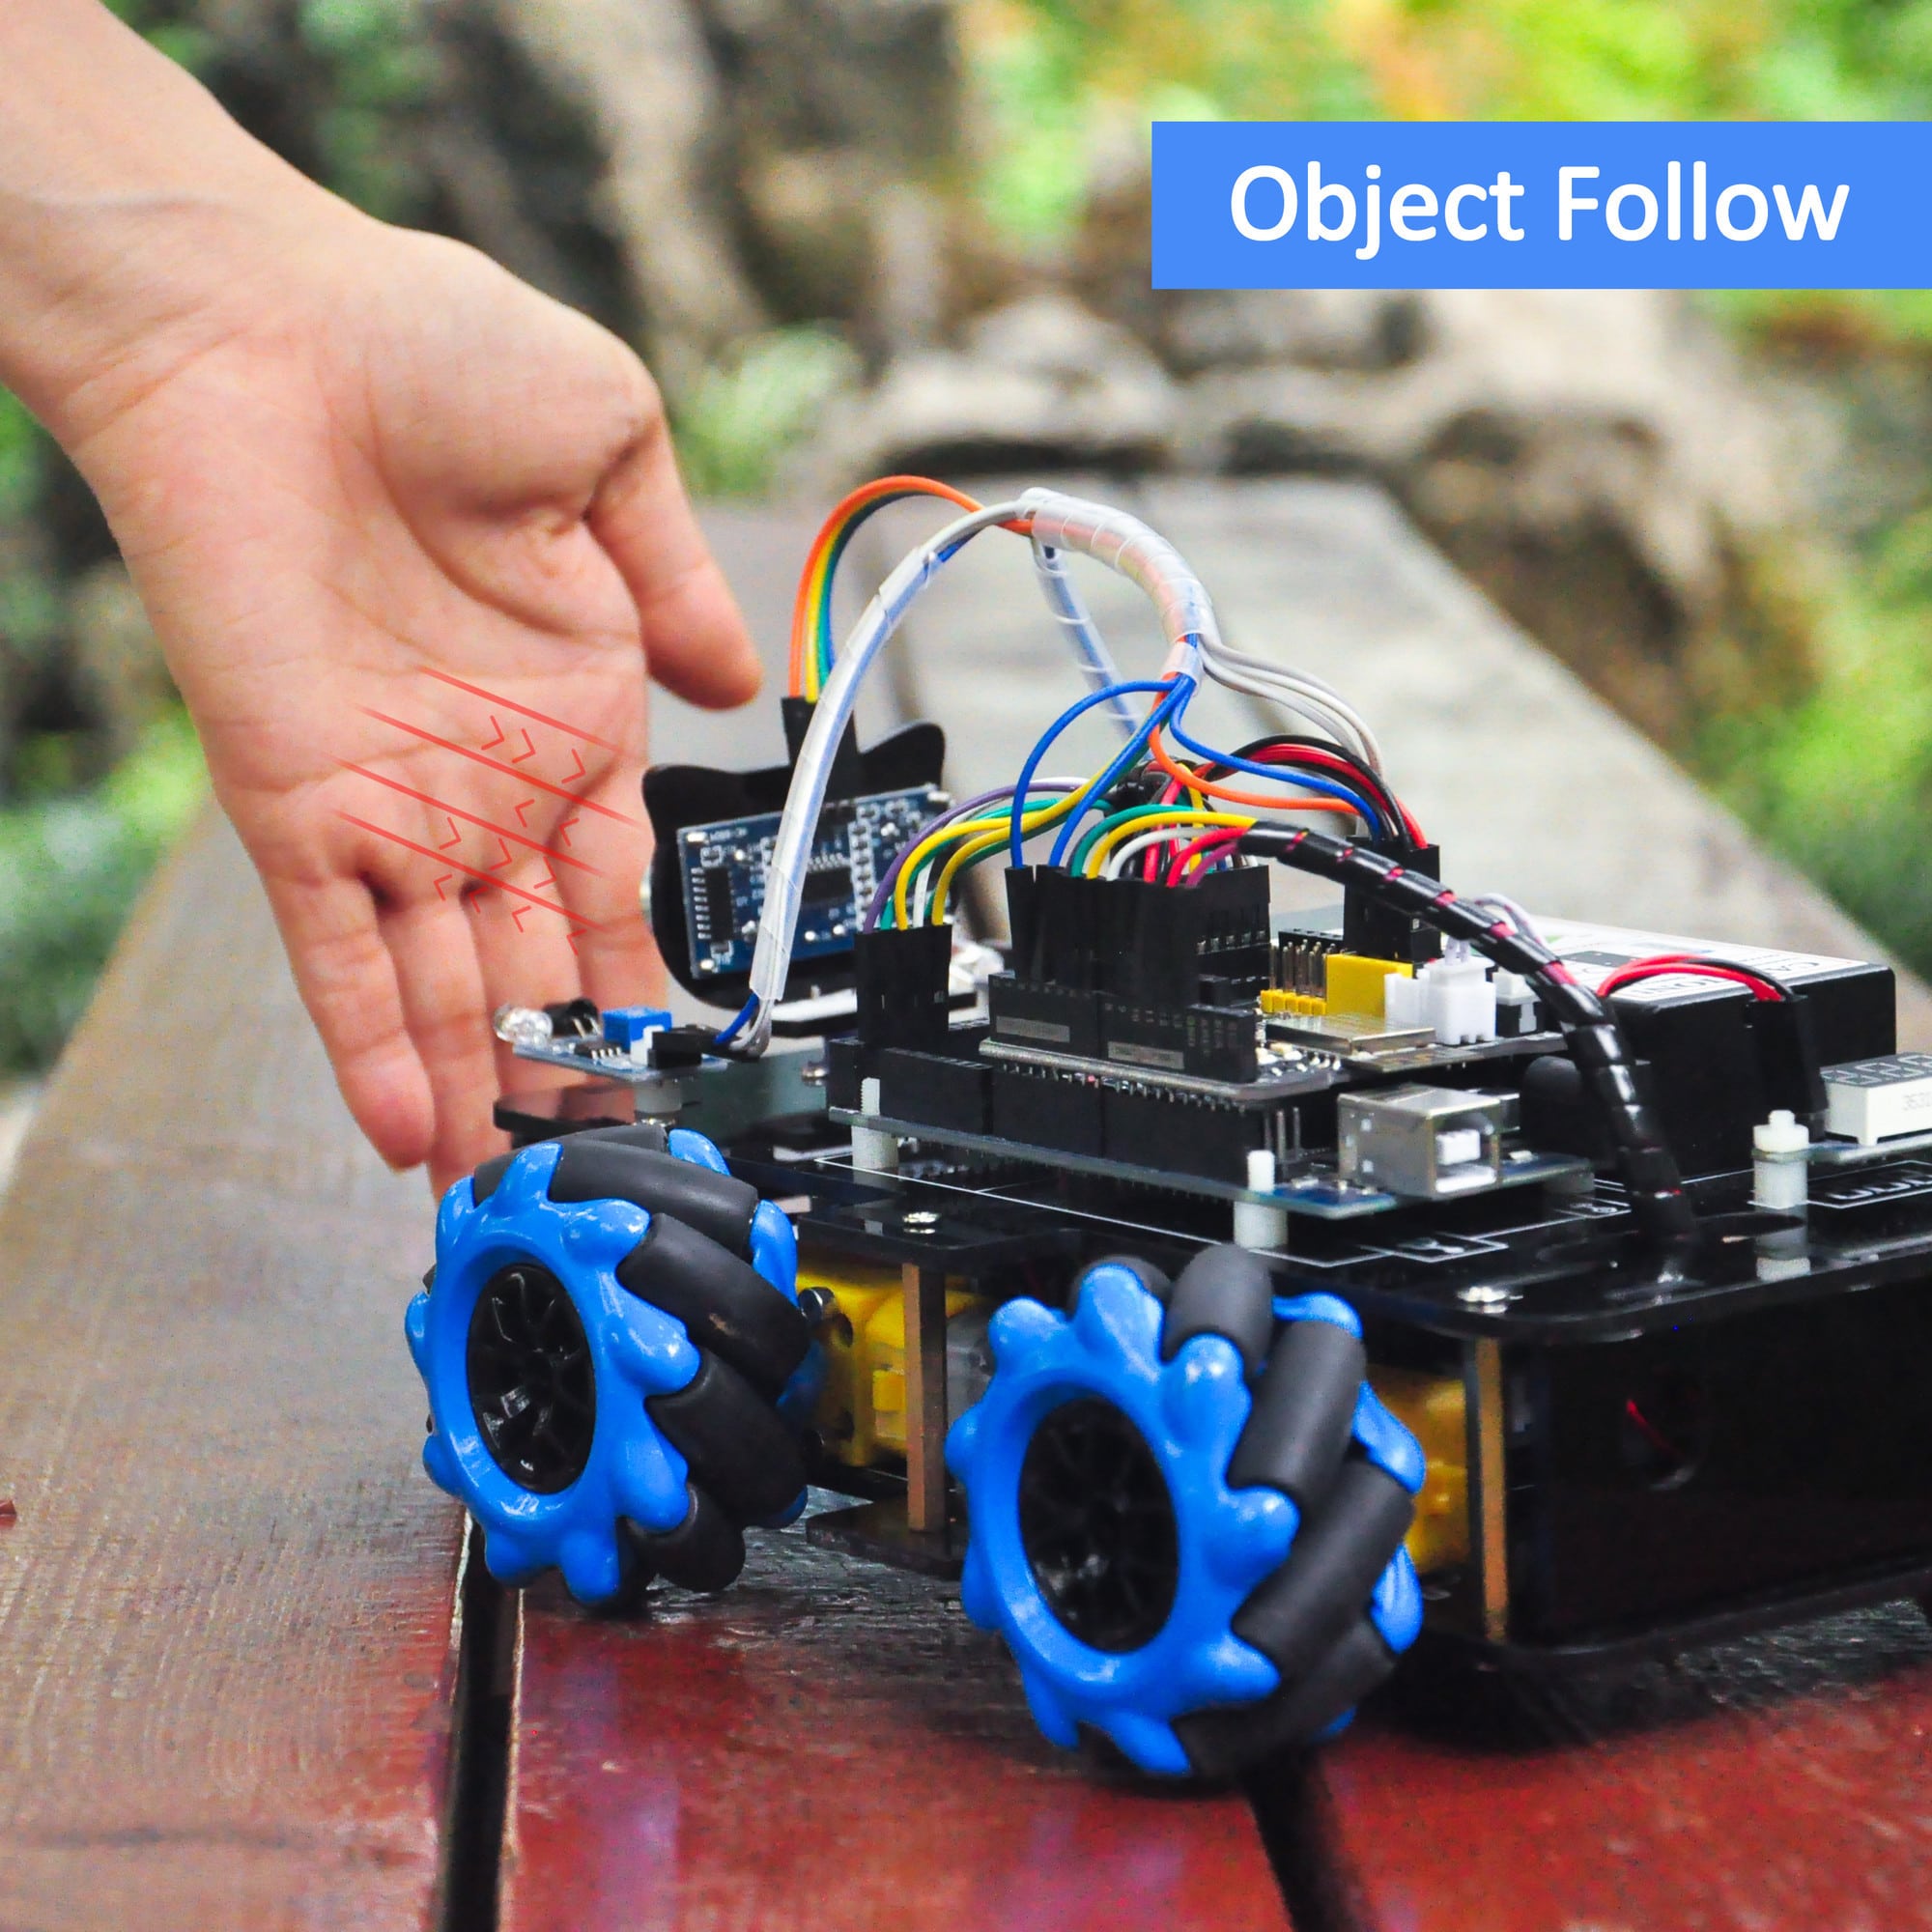 V2.0 Mecanum Wheel Robotic Kit for Arduino Mega2560-Lesson 4 Object follow Robot car